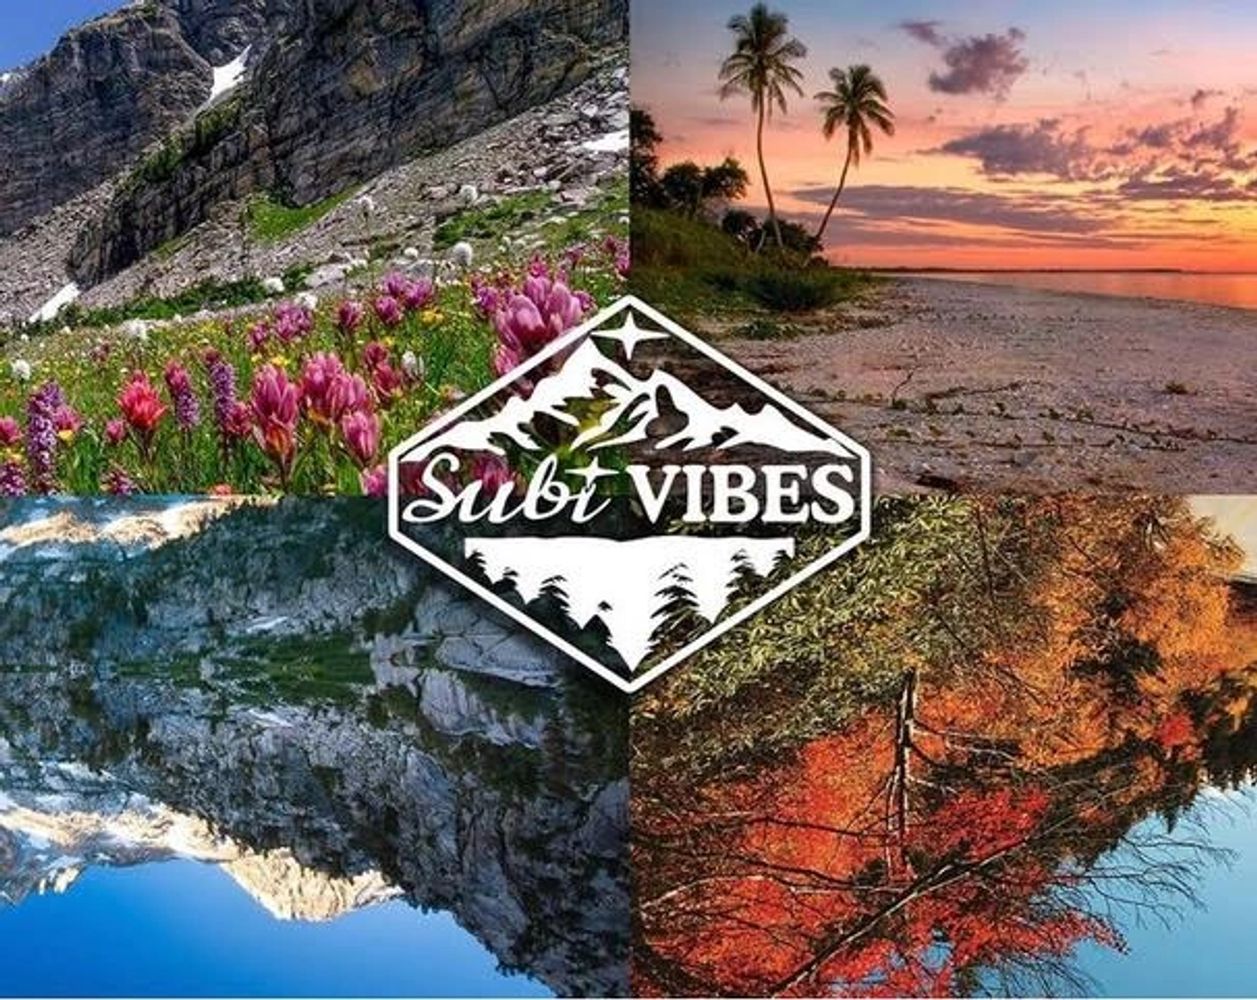 Mountains, Beaches and Subivibes logo